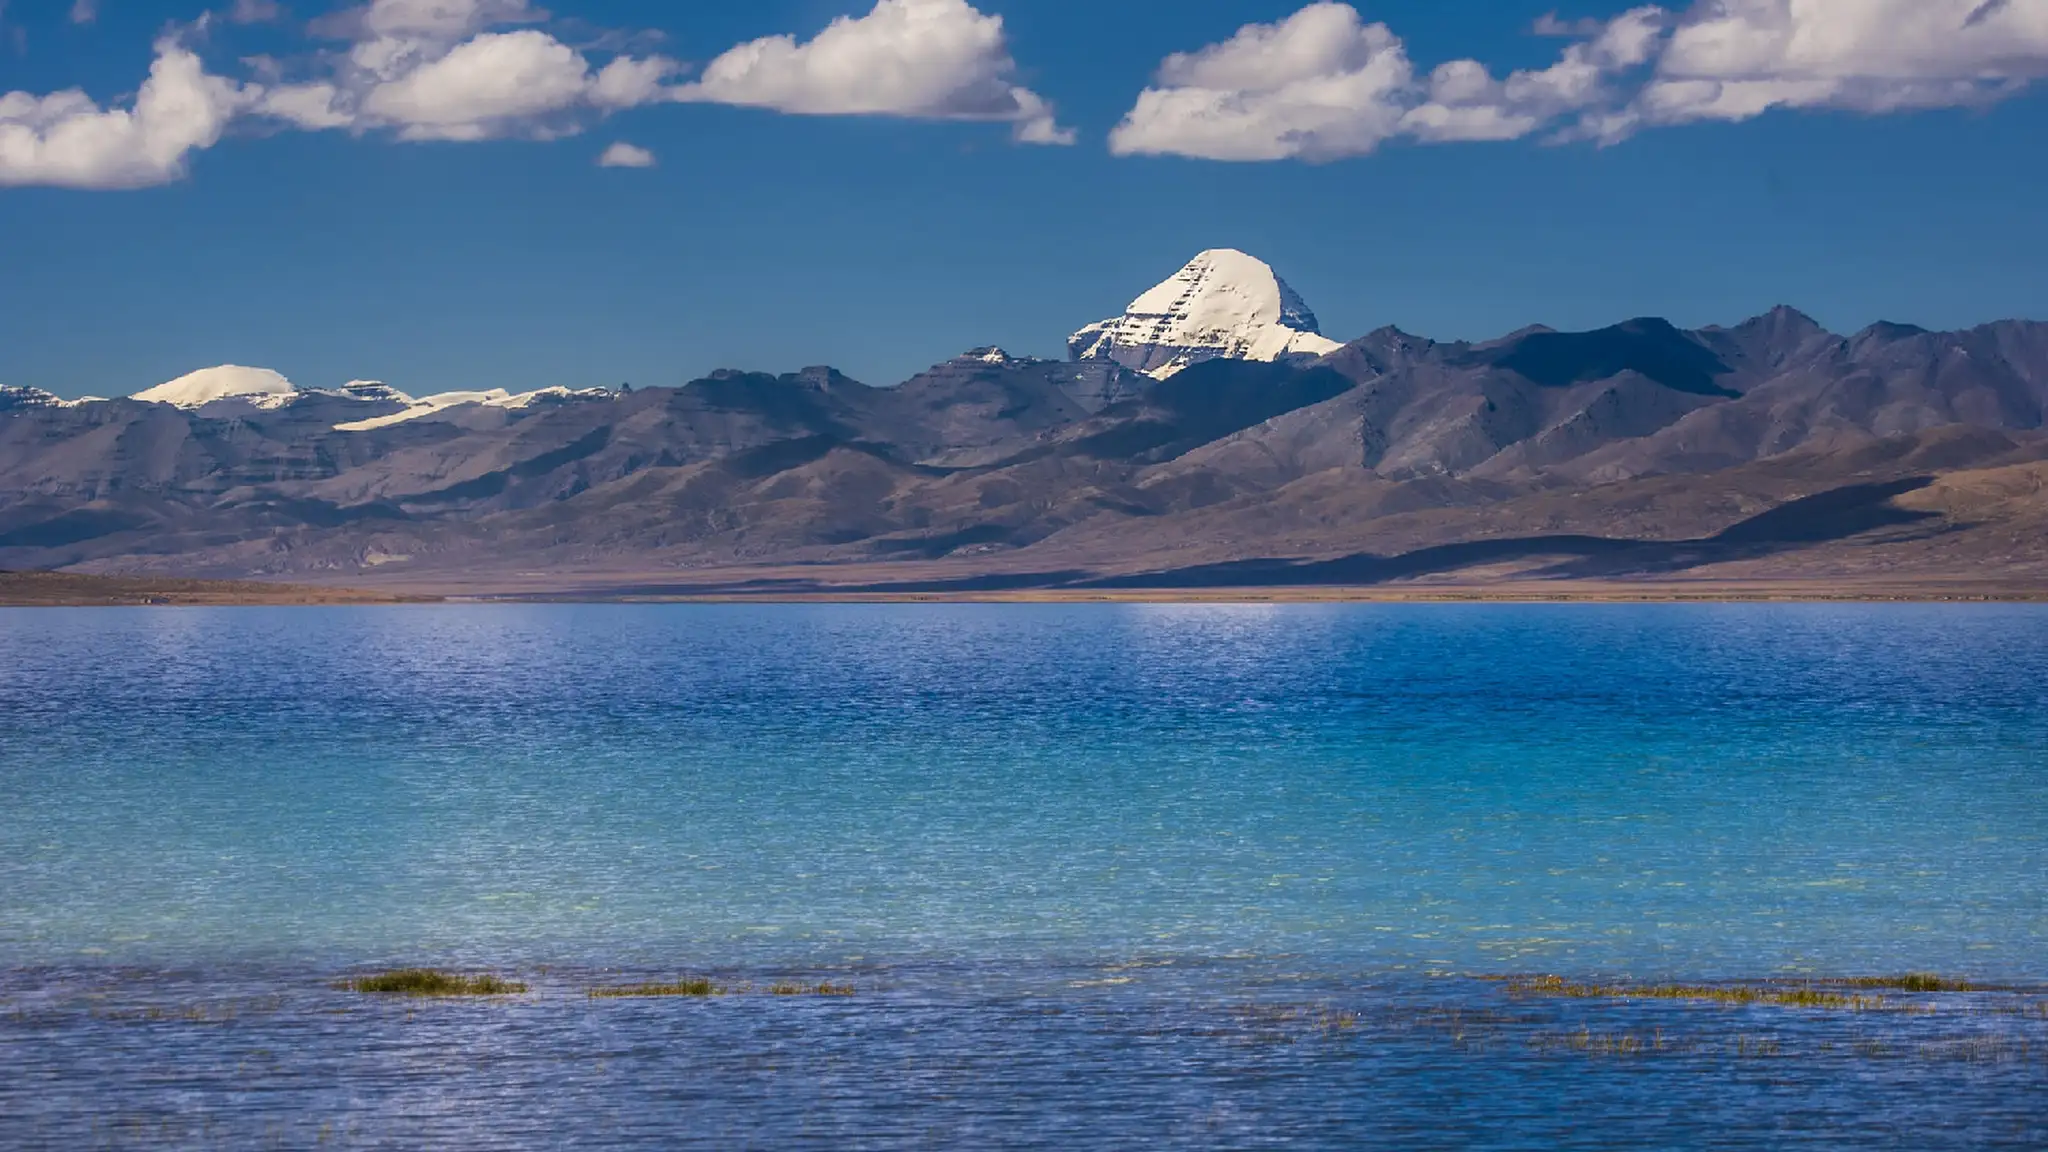 Mount Kailash and Lake